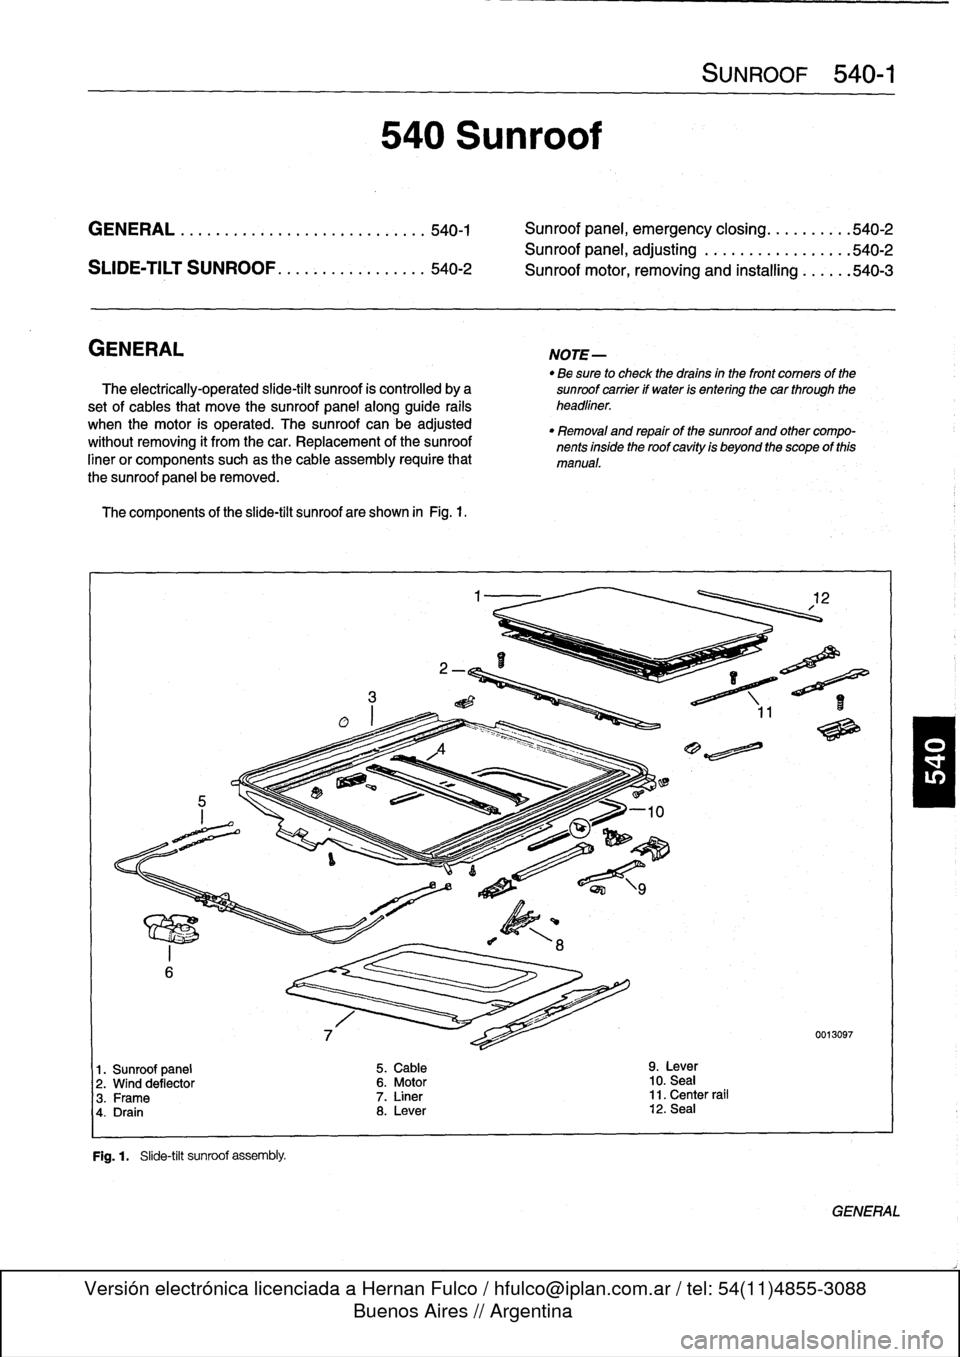 BMW 323i 1998 E36 Workshop Manual 
GENERAL
...
.
.
.
.
.
................
.
.
.
.
540-1

	

Sunroof
panel,
emergency
closing
.......
.
.
.540-2

Sunroof
panel,
adjusting
..
.
...........
.
.
.540-2

SUDE-TILT
SUNROOF
.
.
.
.
.
.
.
.
.